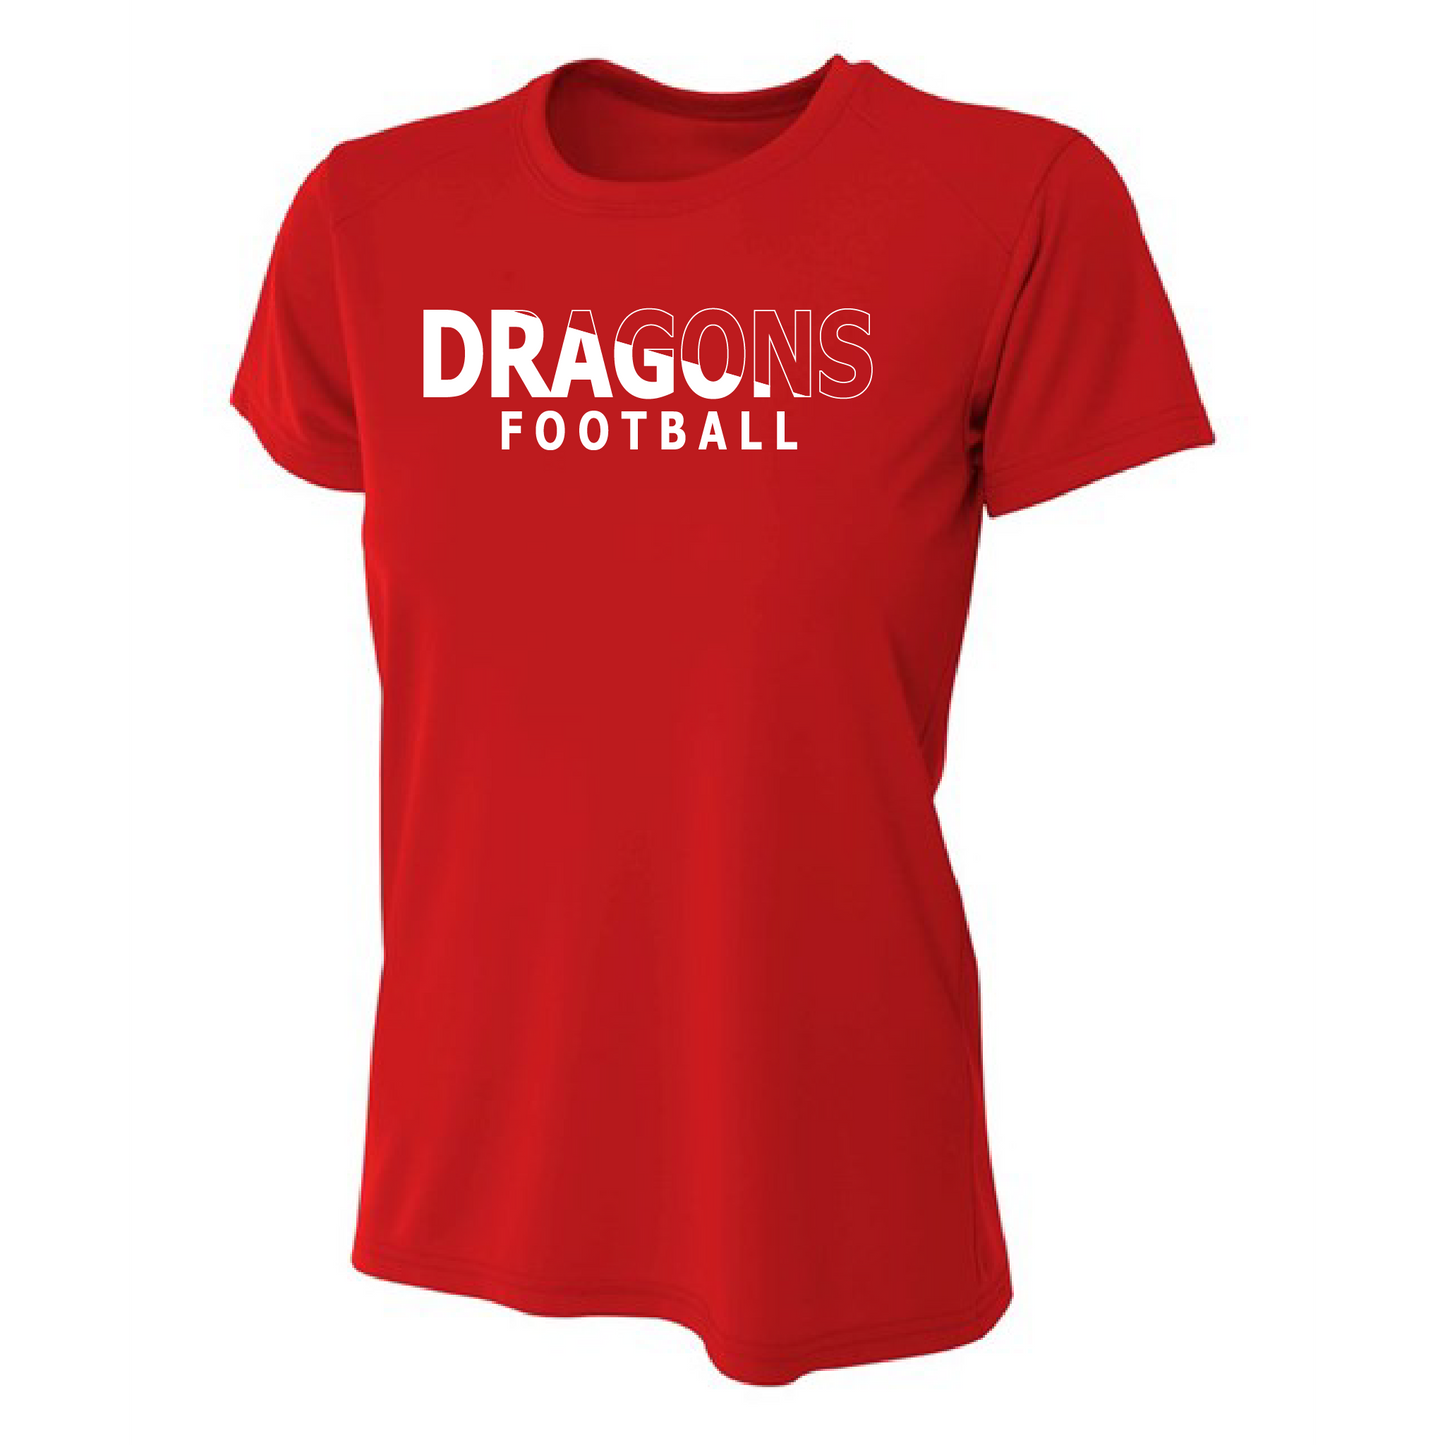 Womens S/S T-Shirt - White Dragons Football Slashed